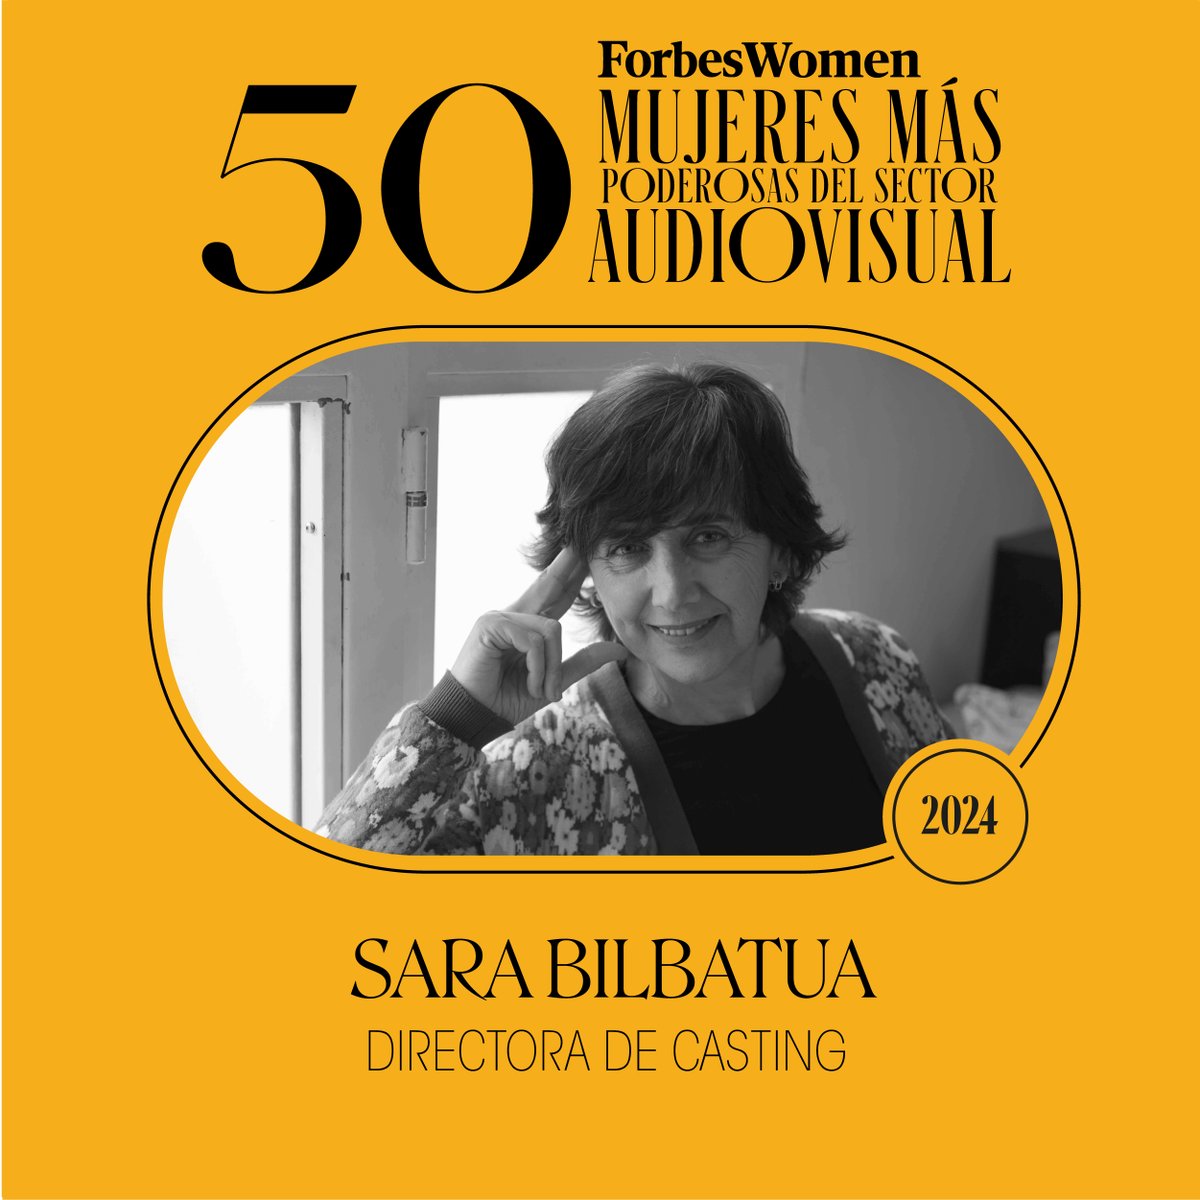 Sara Bilbatua | Directora de casting